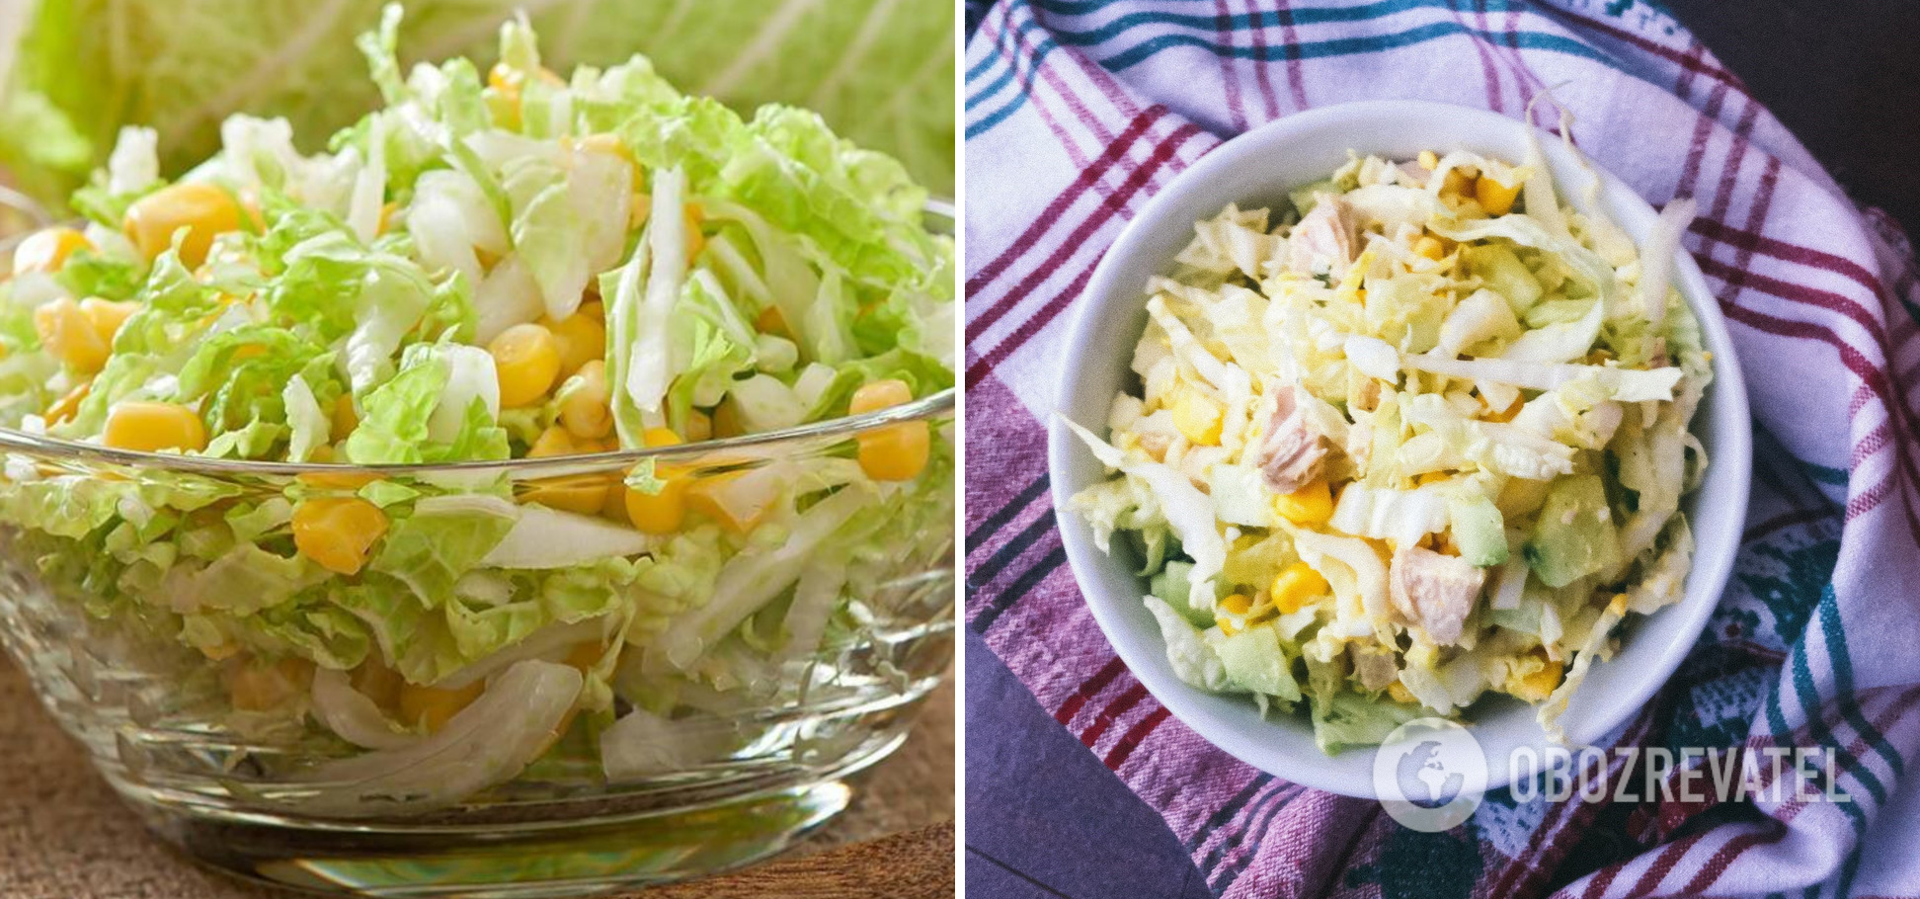 Napa cabbage and fillet salad